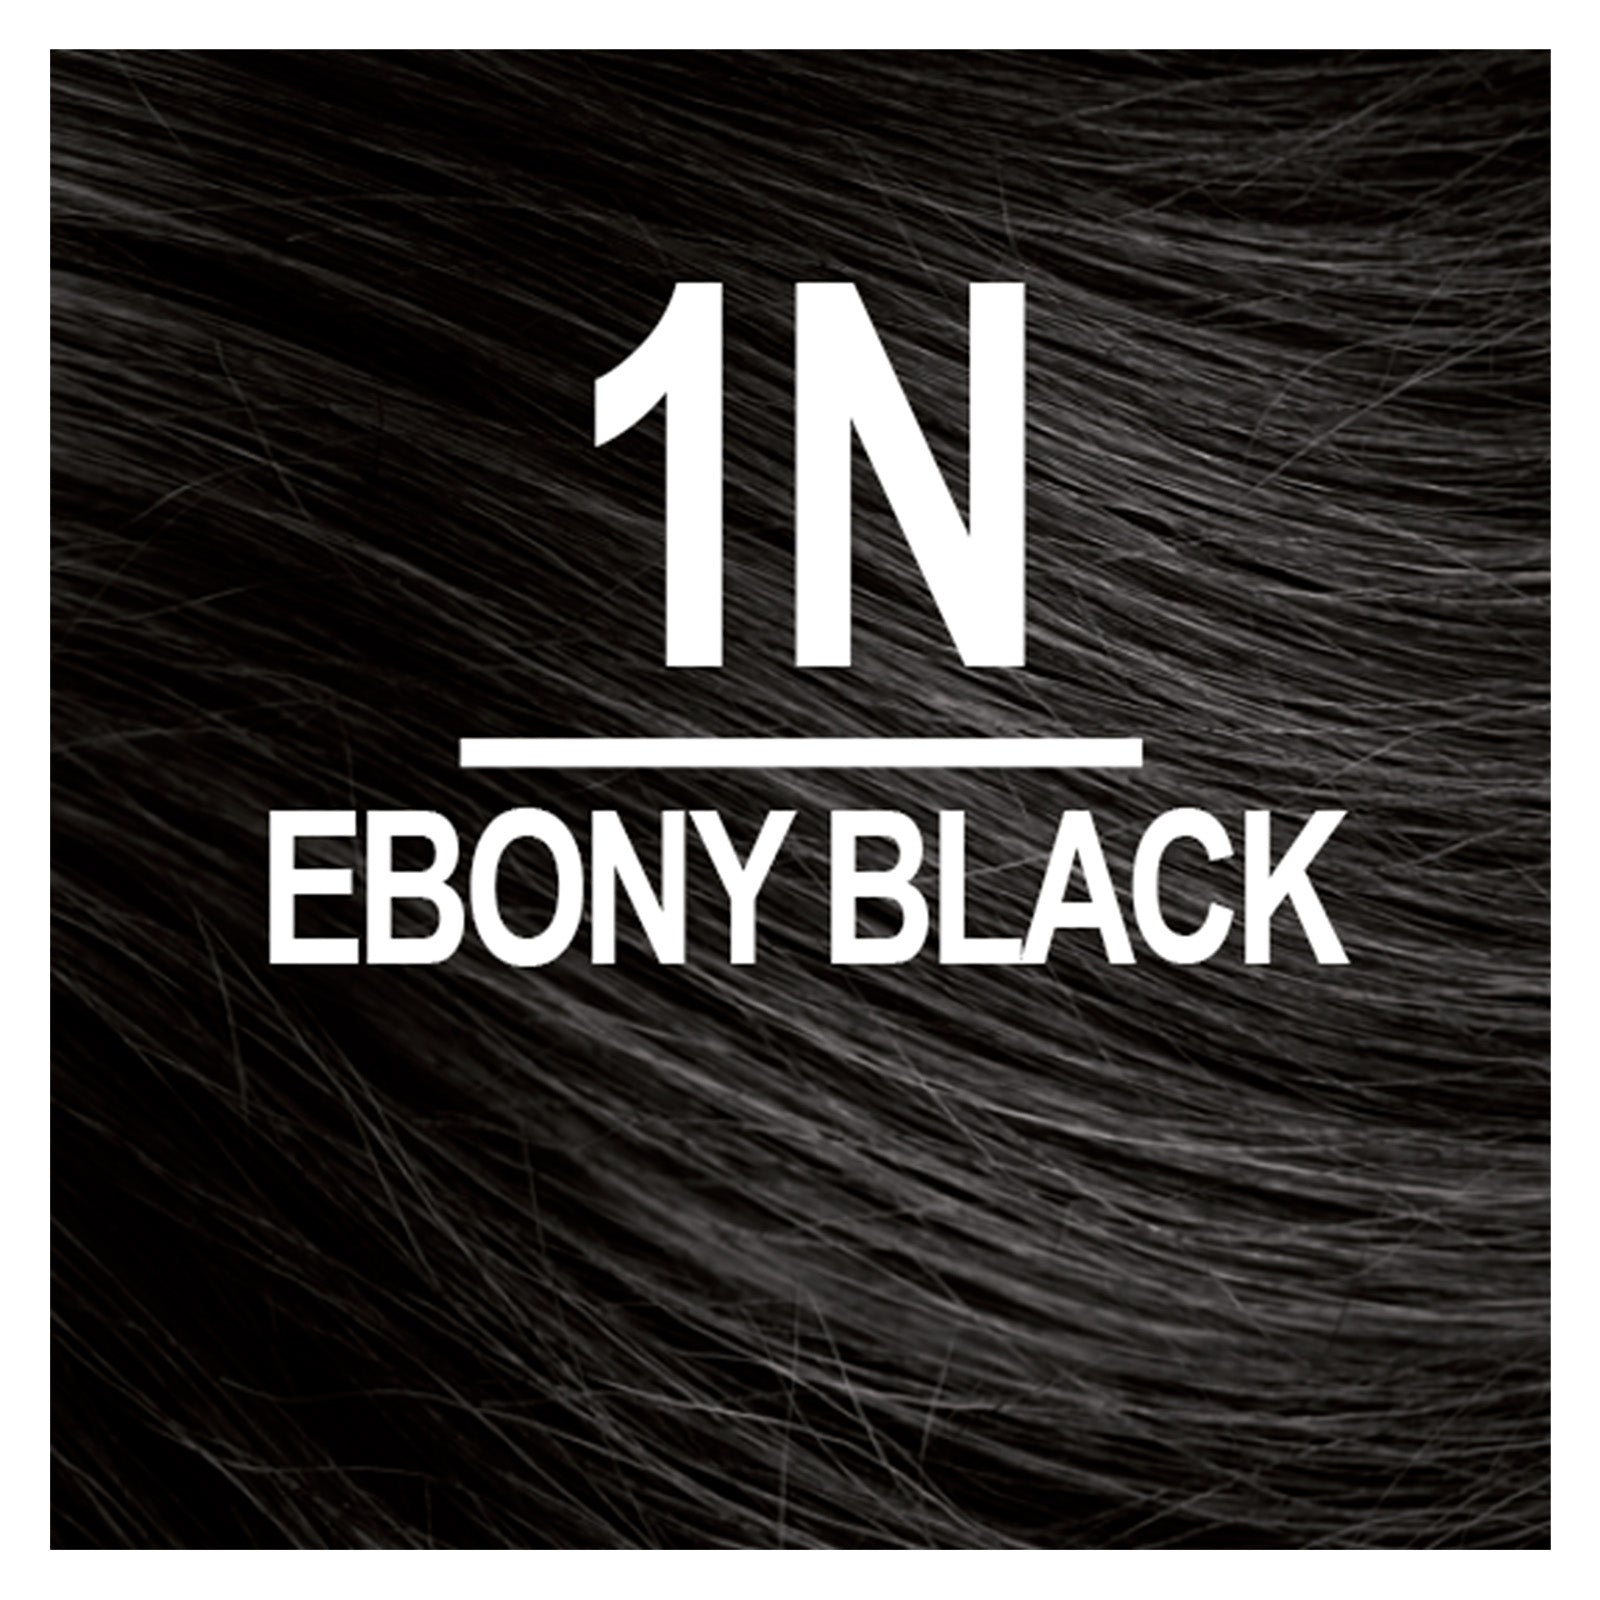 Naturtint Permanent Hair Color 1N Ebony Black - image 5 of 7